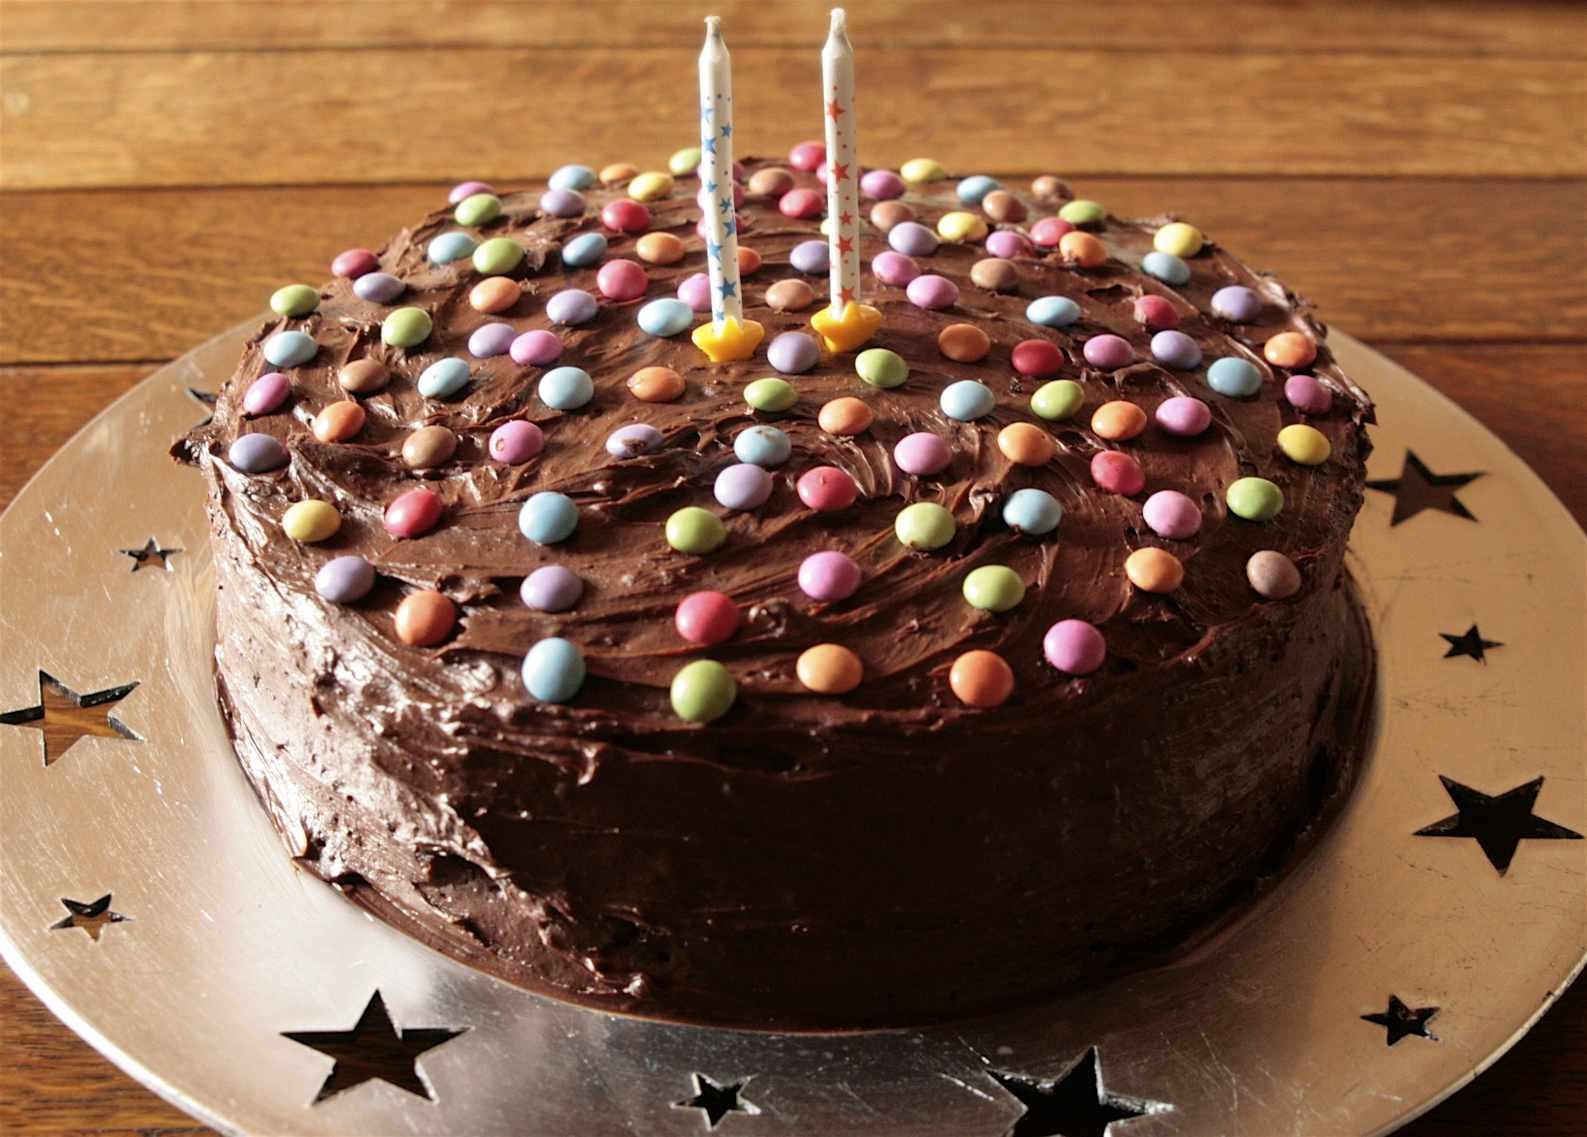 Best ideas about Chocolate Birthday Cake Recipe
. Save or Pin Chocolate Birthday Cake Now.